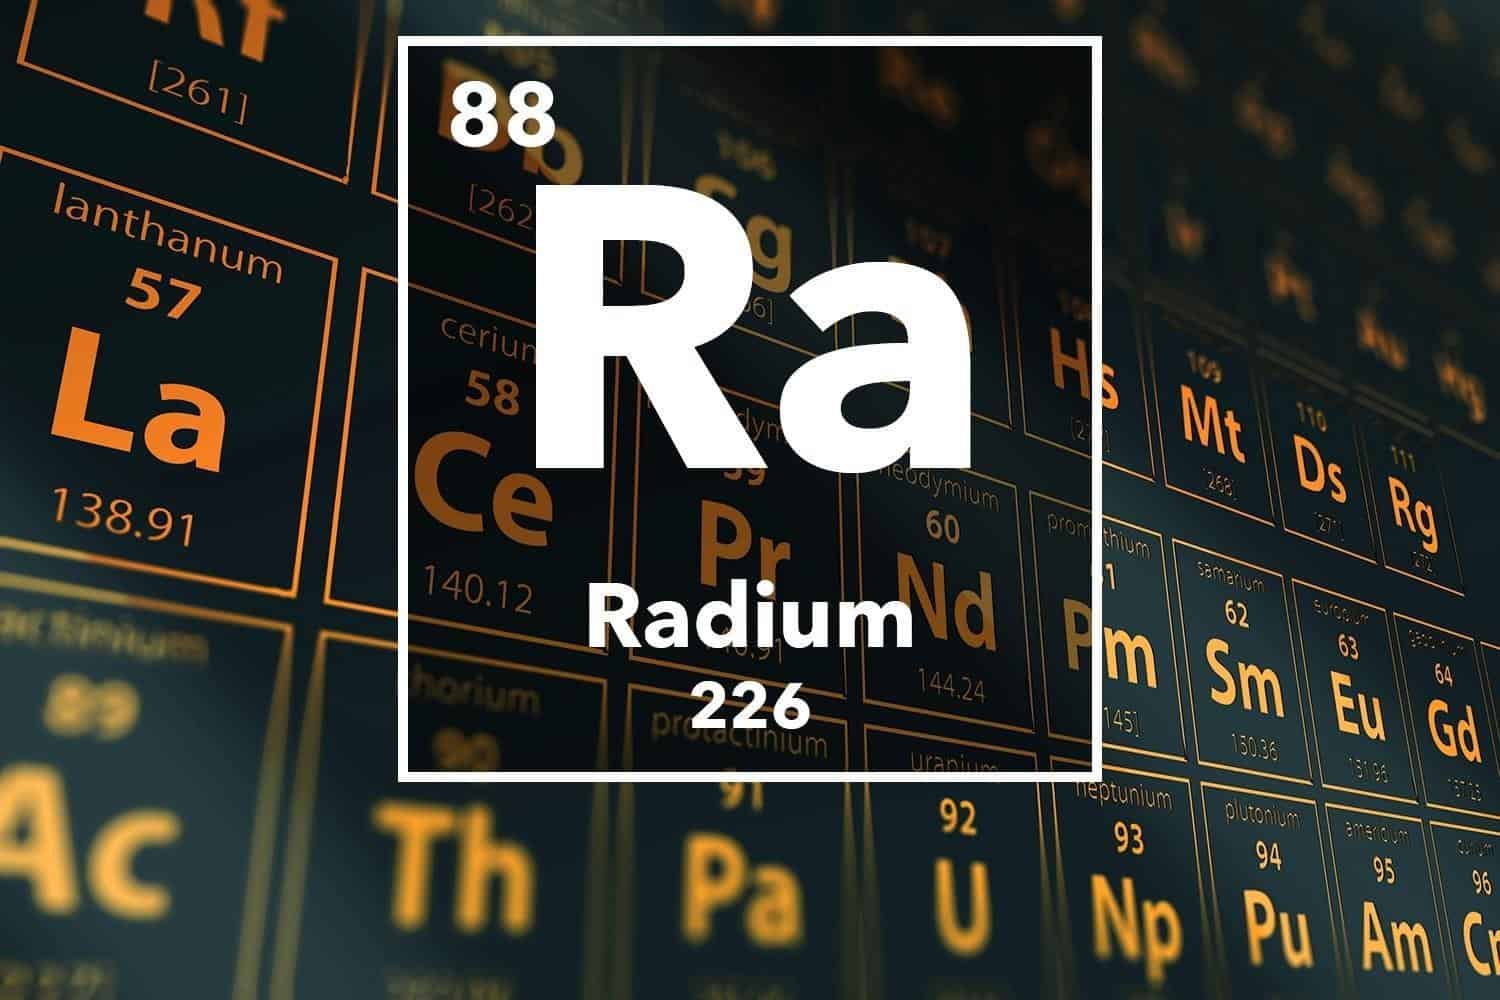 Radium (Ra)